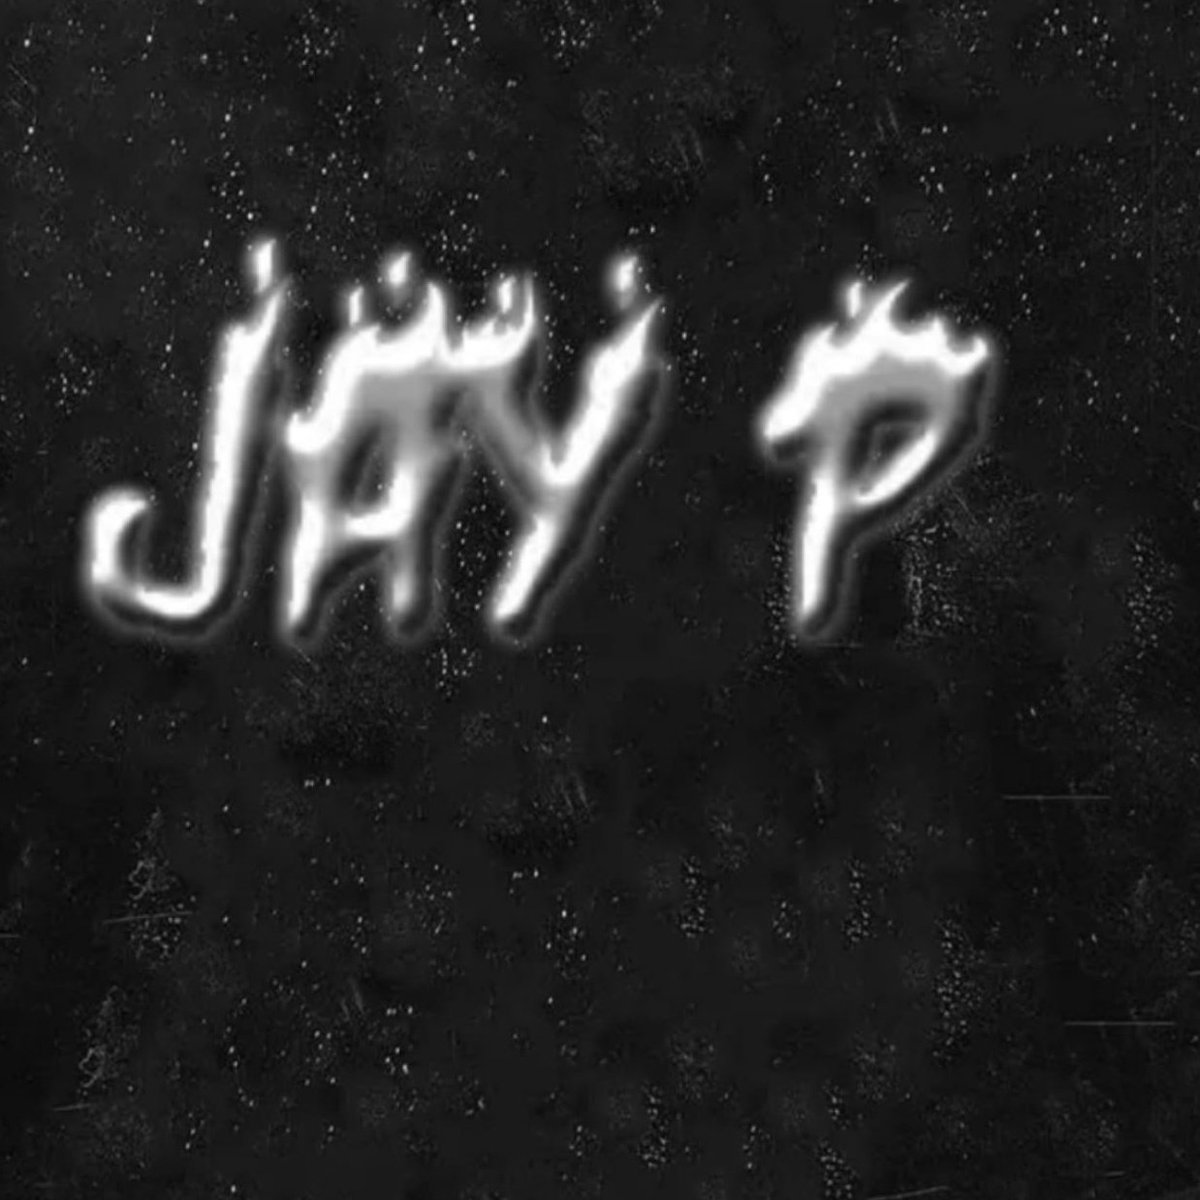 #NewProfilePic #JP #UpcomingArtist #OfficialLogo #JAY P #HipHop